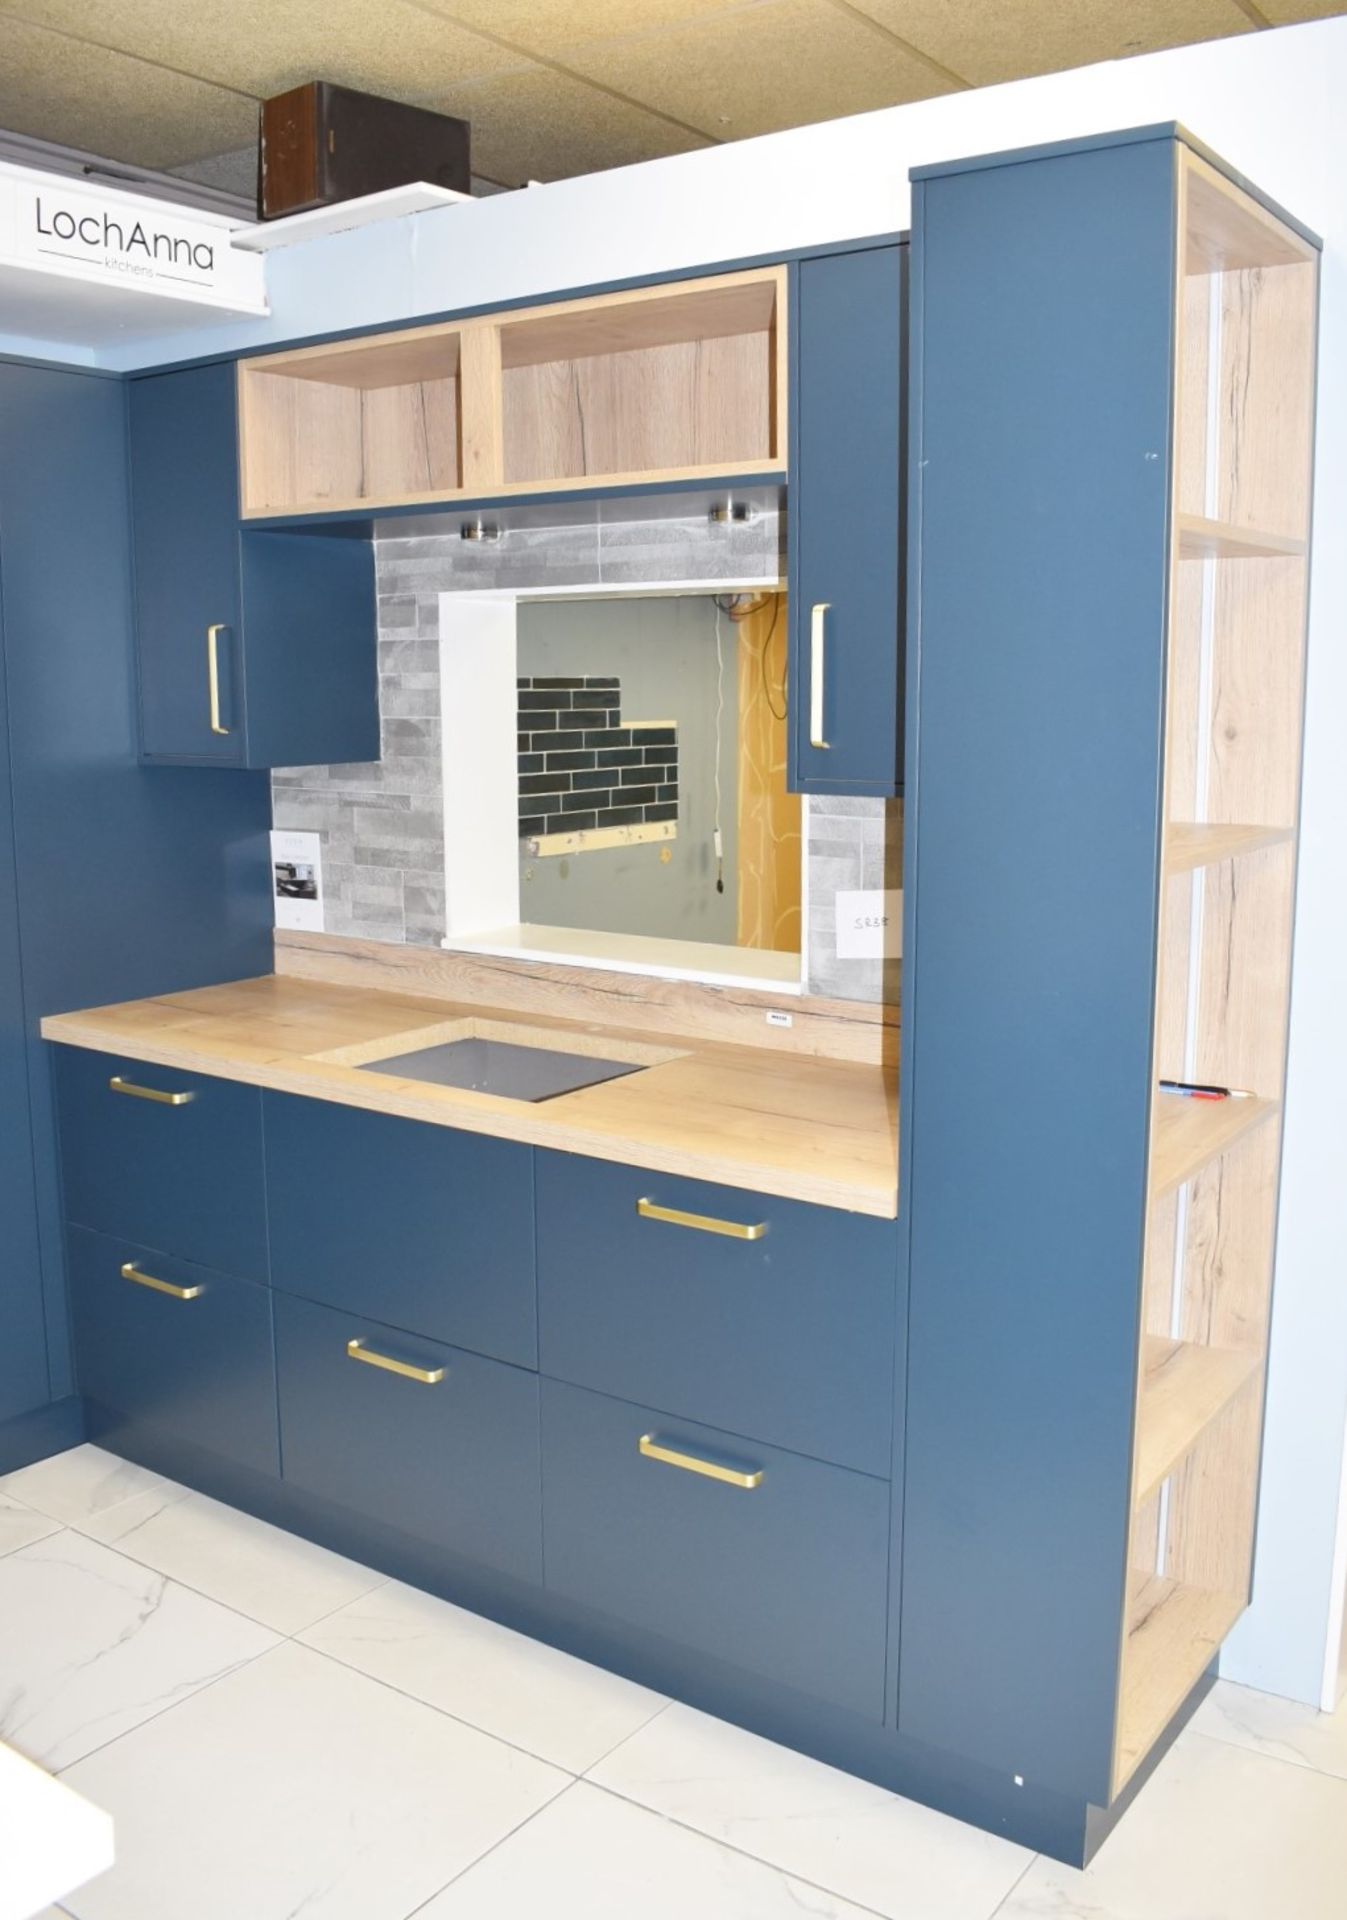 1 x LochAnna Ex Display Fitted Kitchen Finished in Matt Indigo Blue and Oak - Image 7 of 42